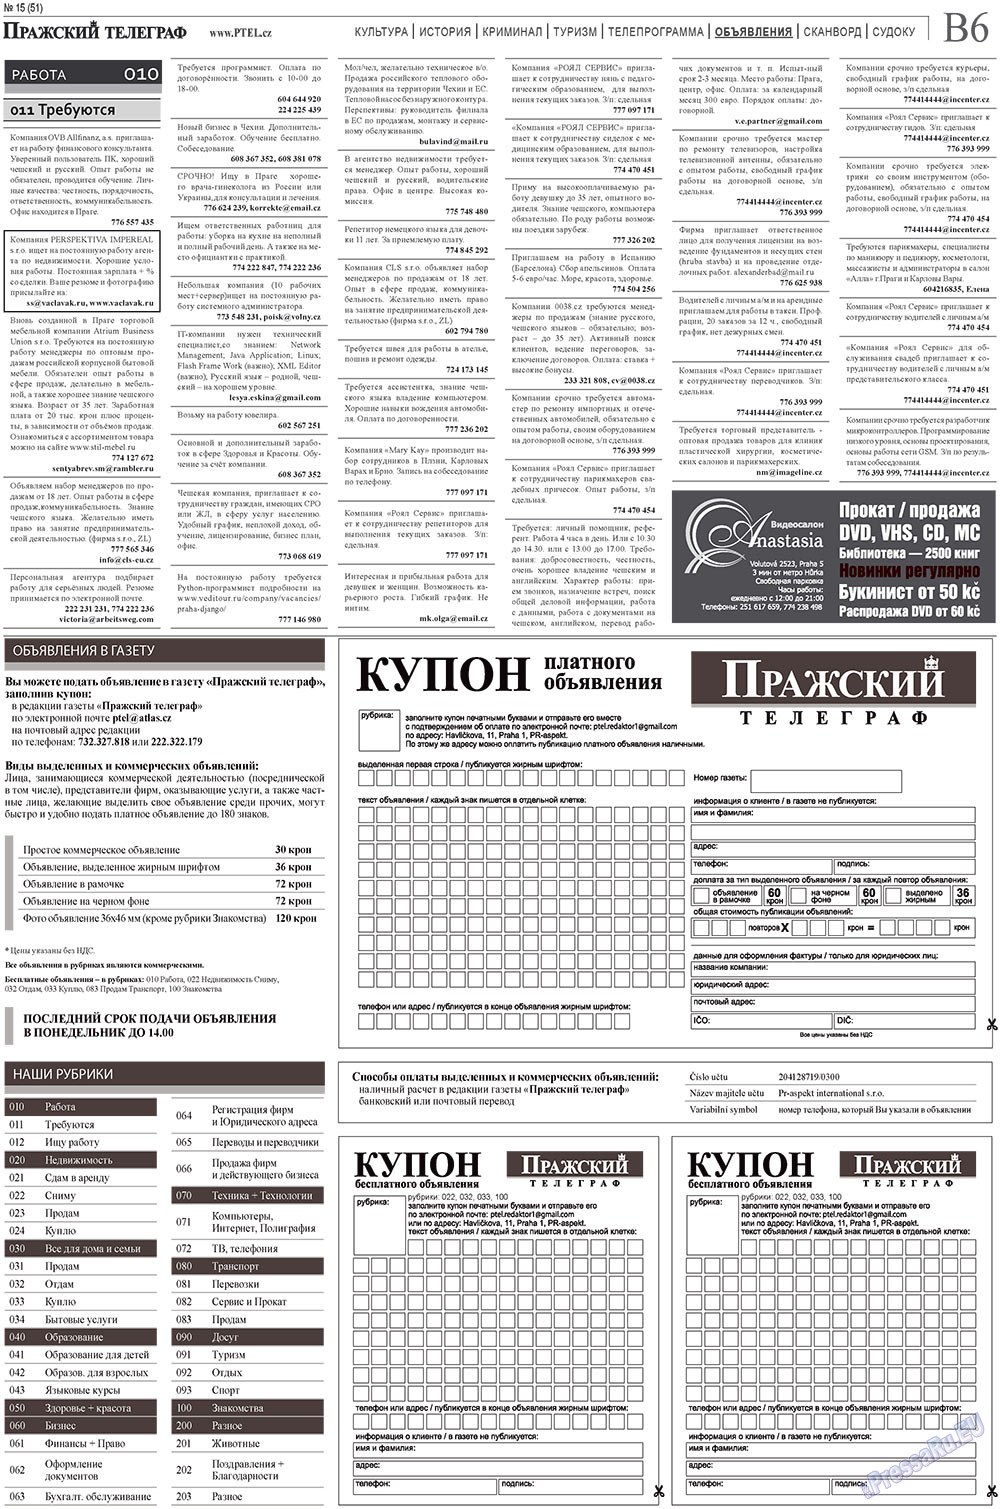 Пражский телеграф, газета. 2010 №15 стр.14